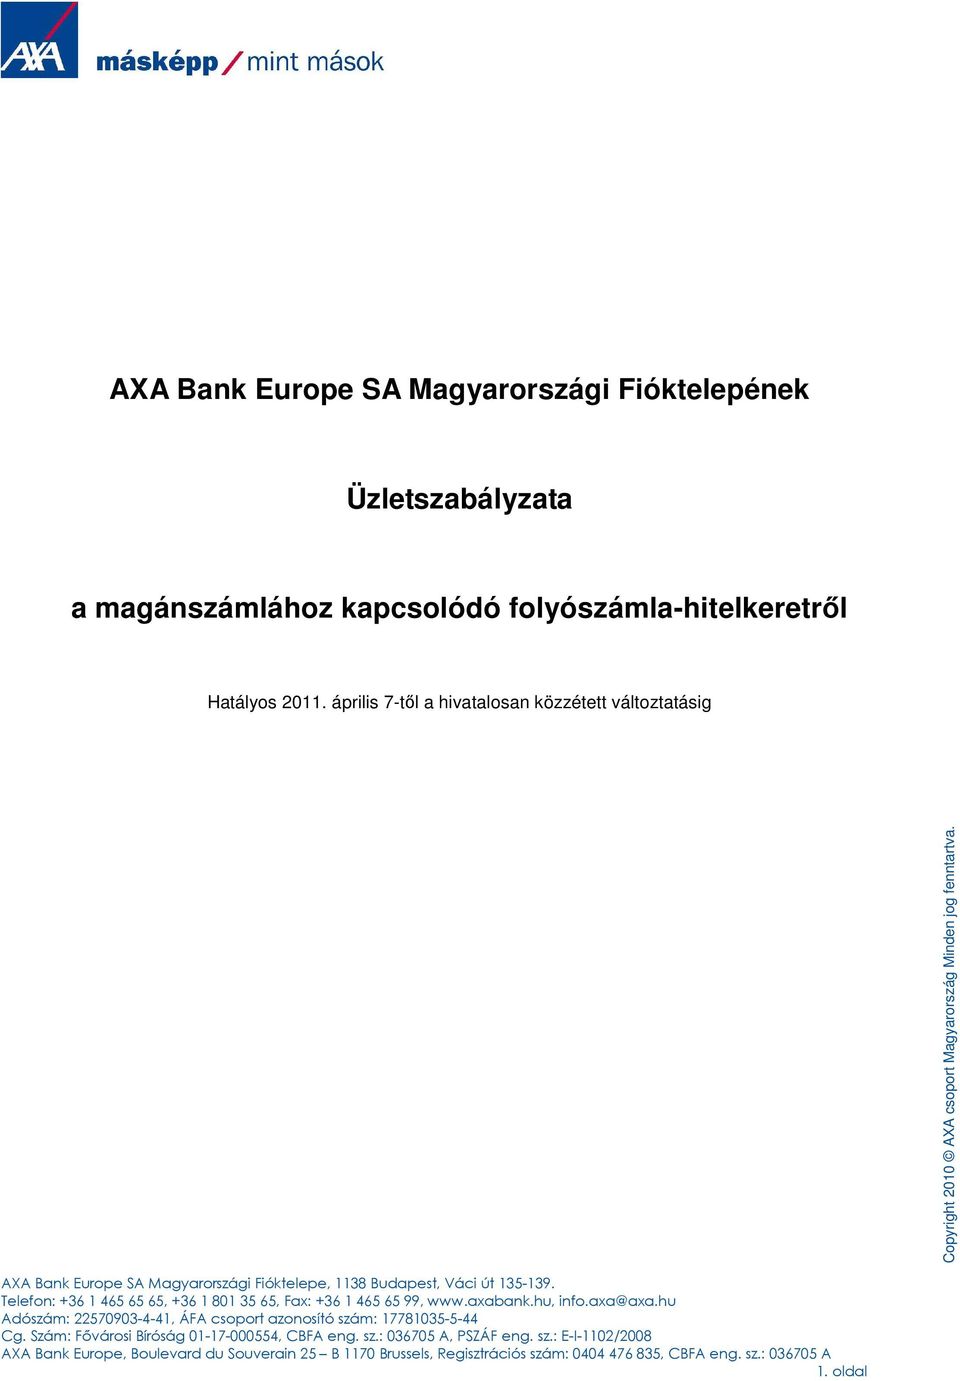 AXA Bank Europe SA Magyarországi Fióktelepe, 1138 Budapest, Váci út 135-139. Telefon: +36 1 465 65 65, +36 1 801 35 65, Fax: +36 1 465 65 99, www.axabank.hu, info.axa@axa.